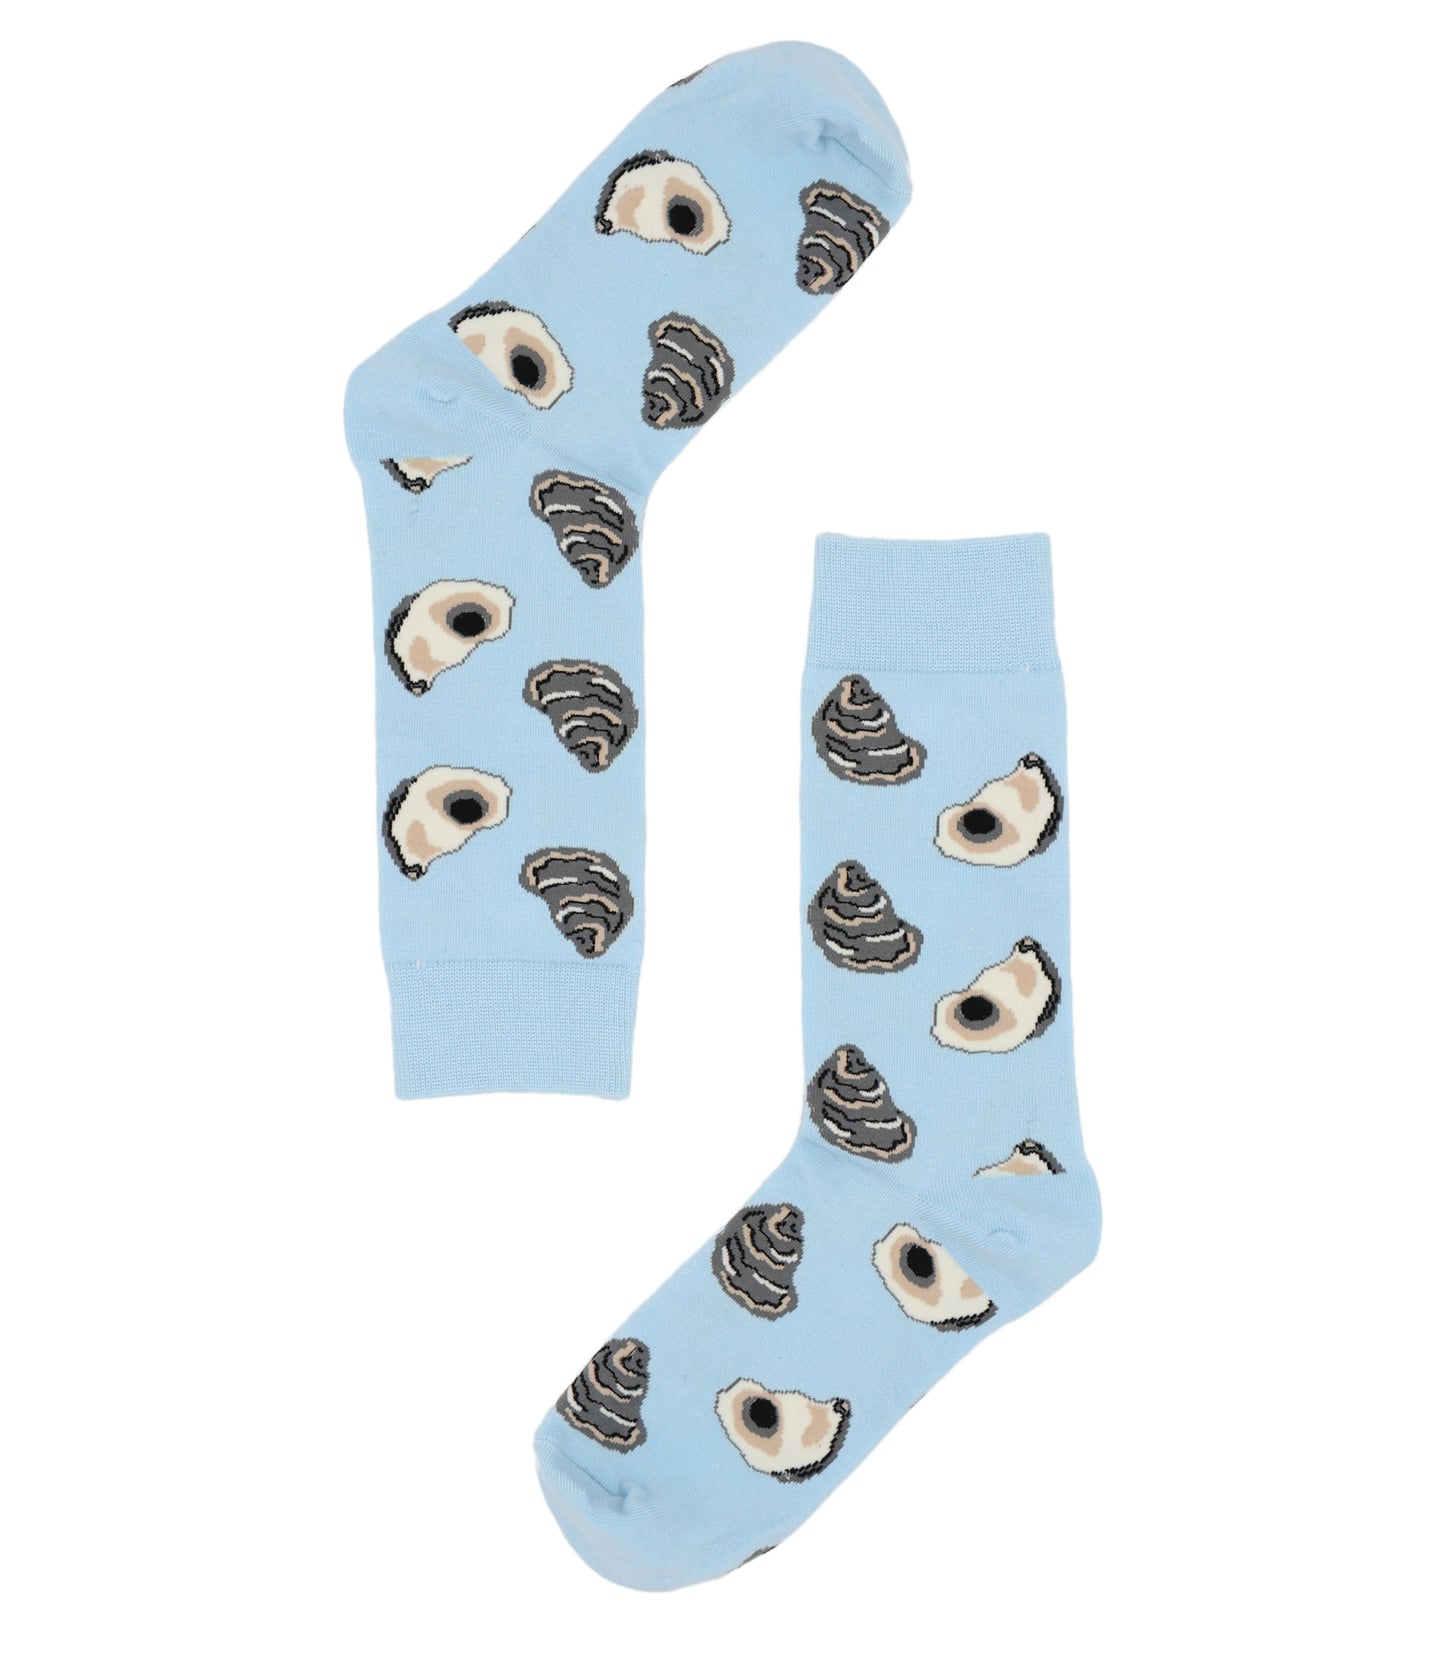 Sick Socks - Oyster - Favorite Seafood Dress Casual Socks